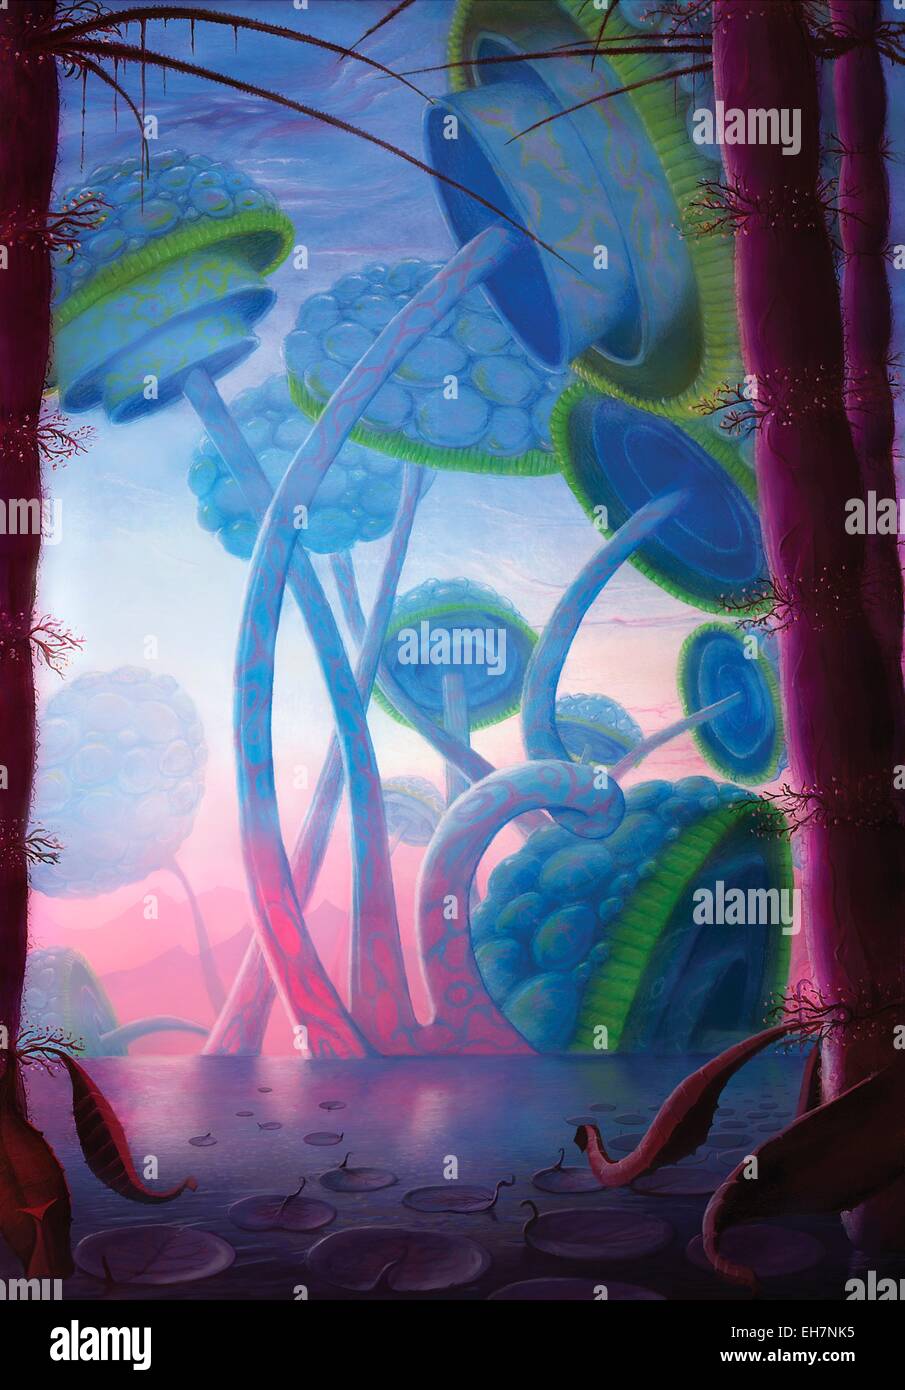 Fungo gigante lifeforms sul mondo alieno Foto Stock